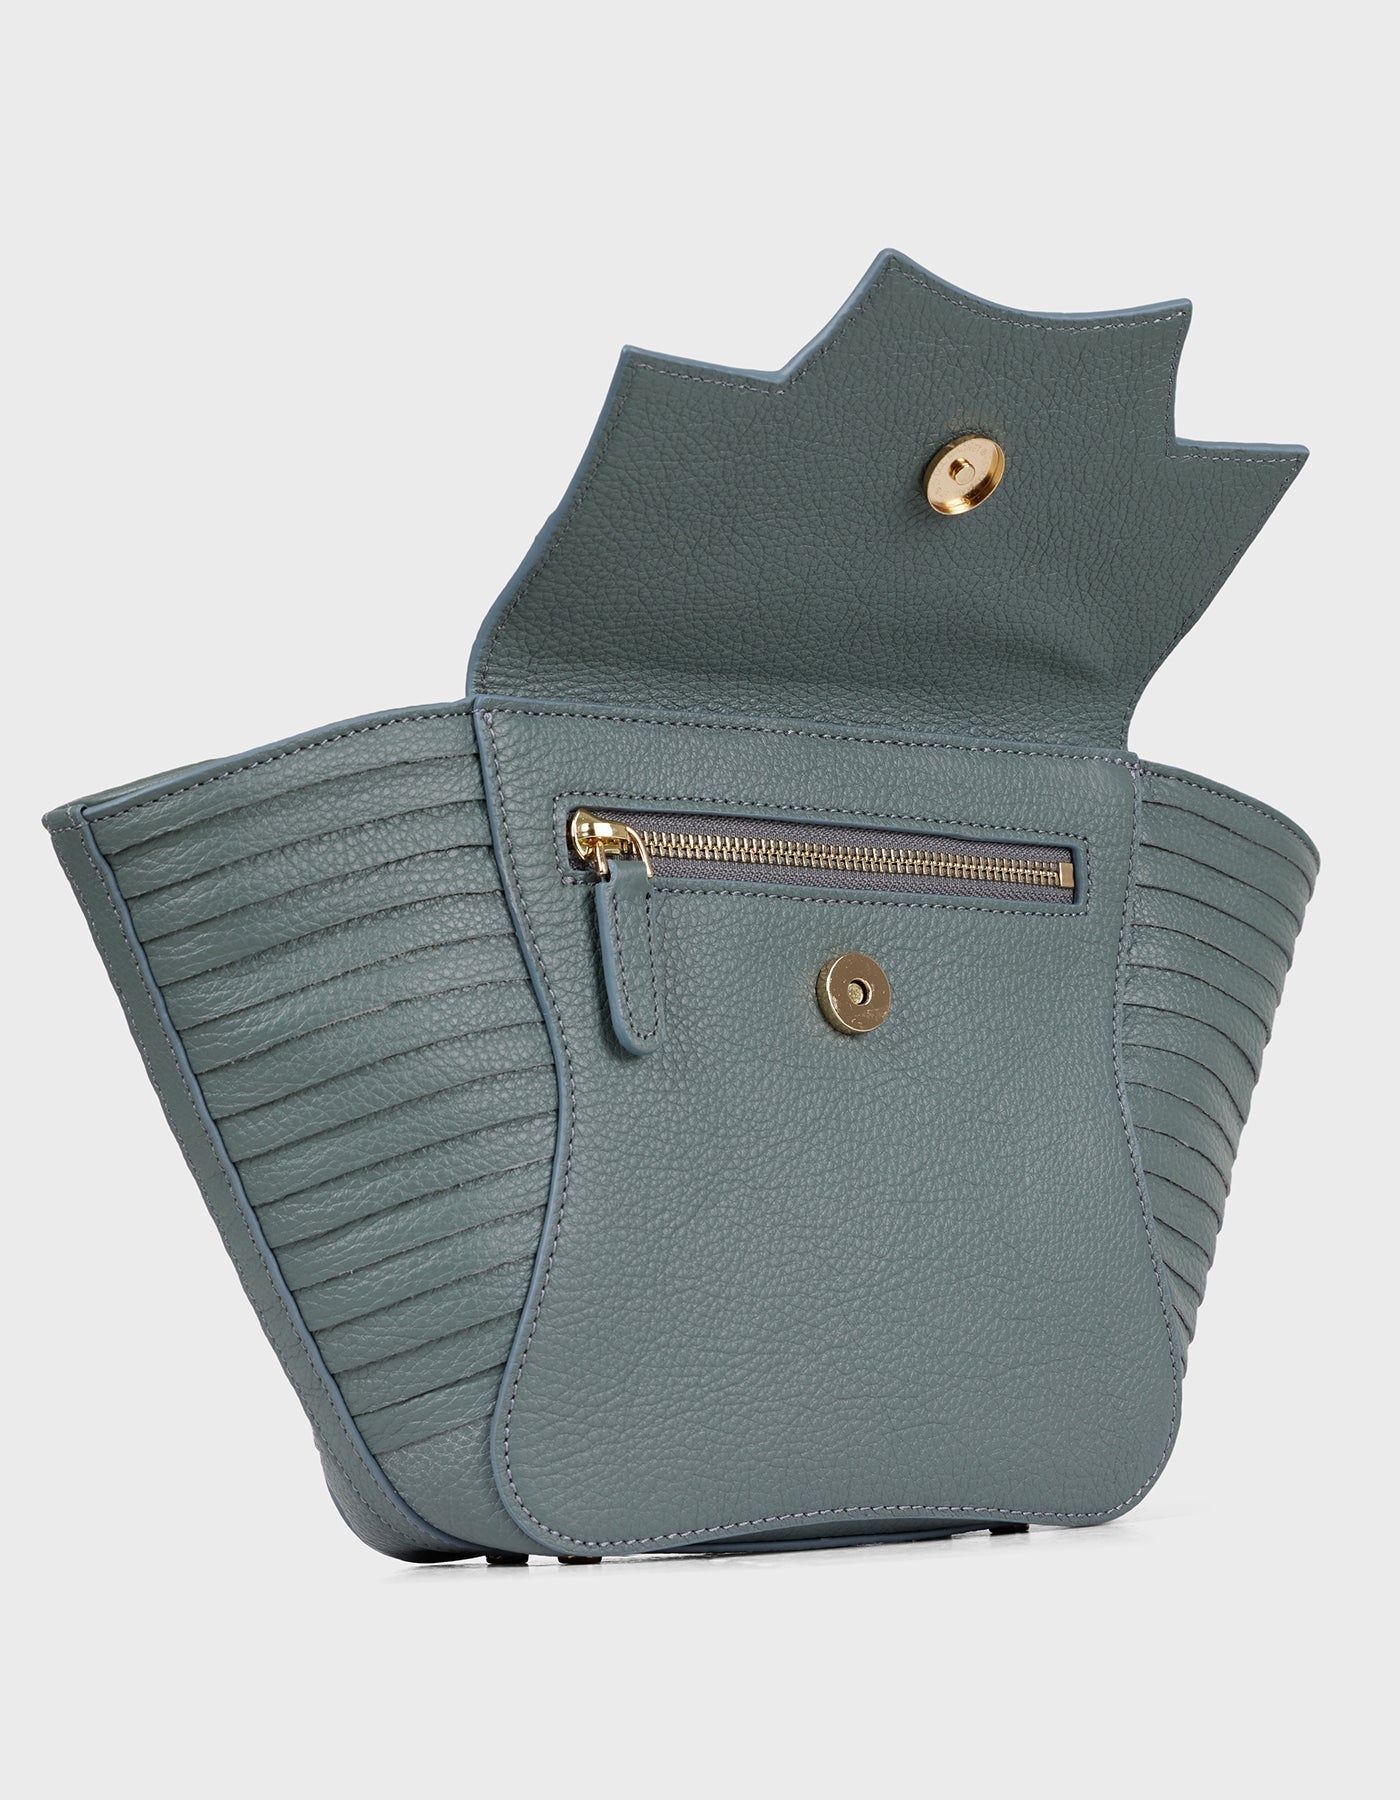 Orbis Midi Tote Bag - Finest Quality HiVa Atelier GmbH Leather Accessories